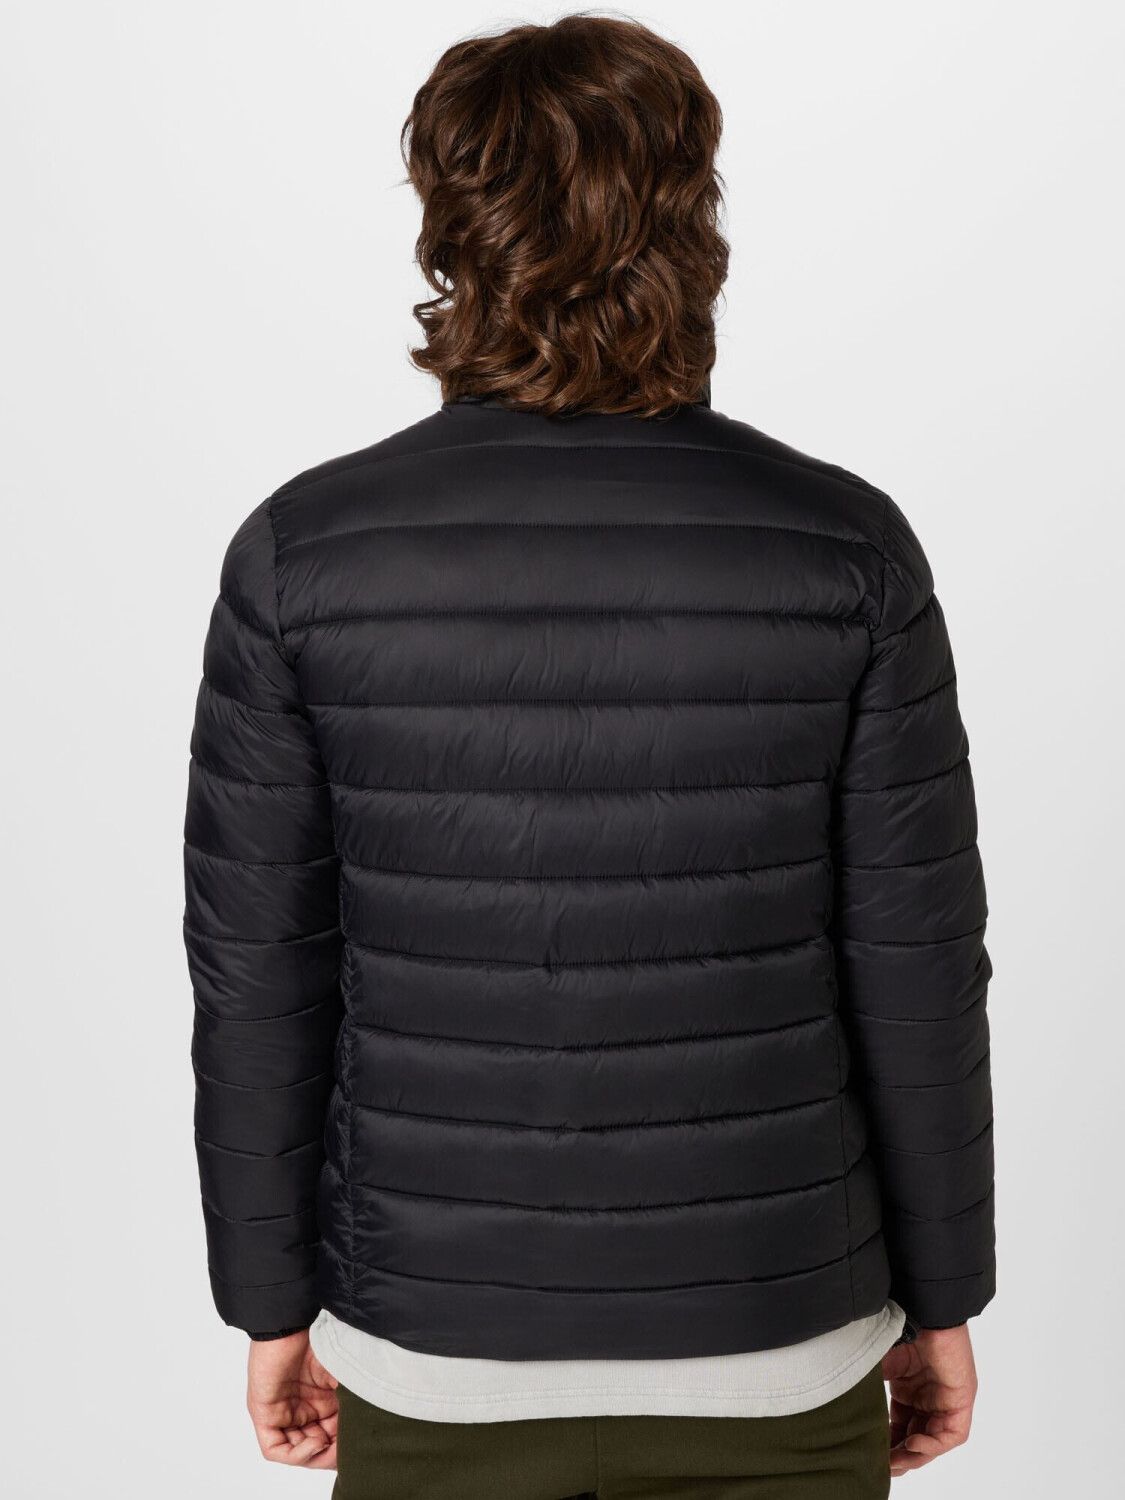 Superdry Code Mtn Non Hood Fuji Jacket black (M5011517A-O2A) ab 63,22 € |  Preisvergleich bei